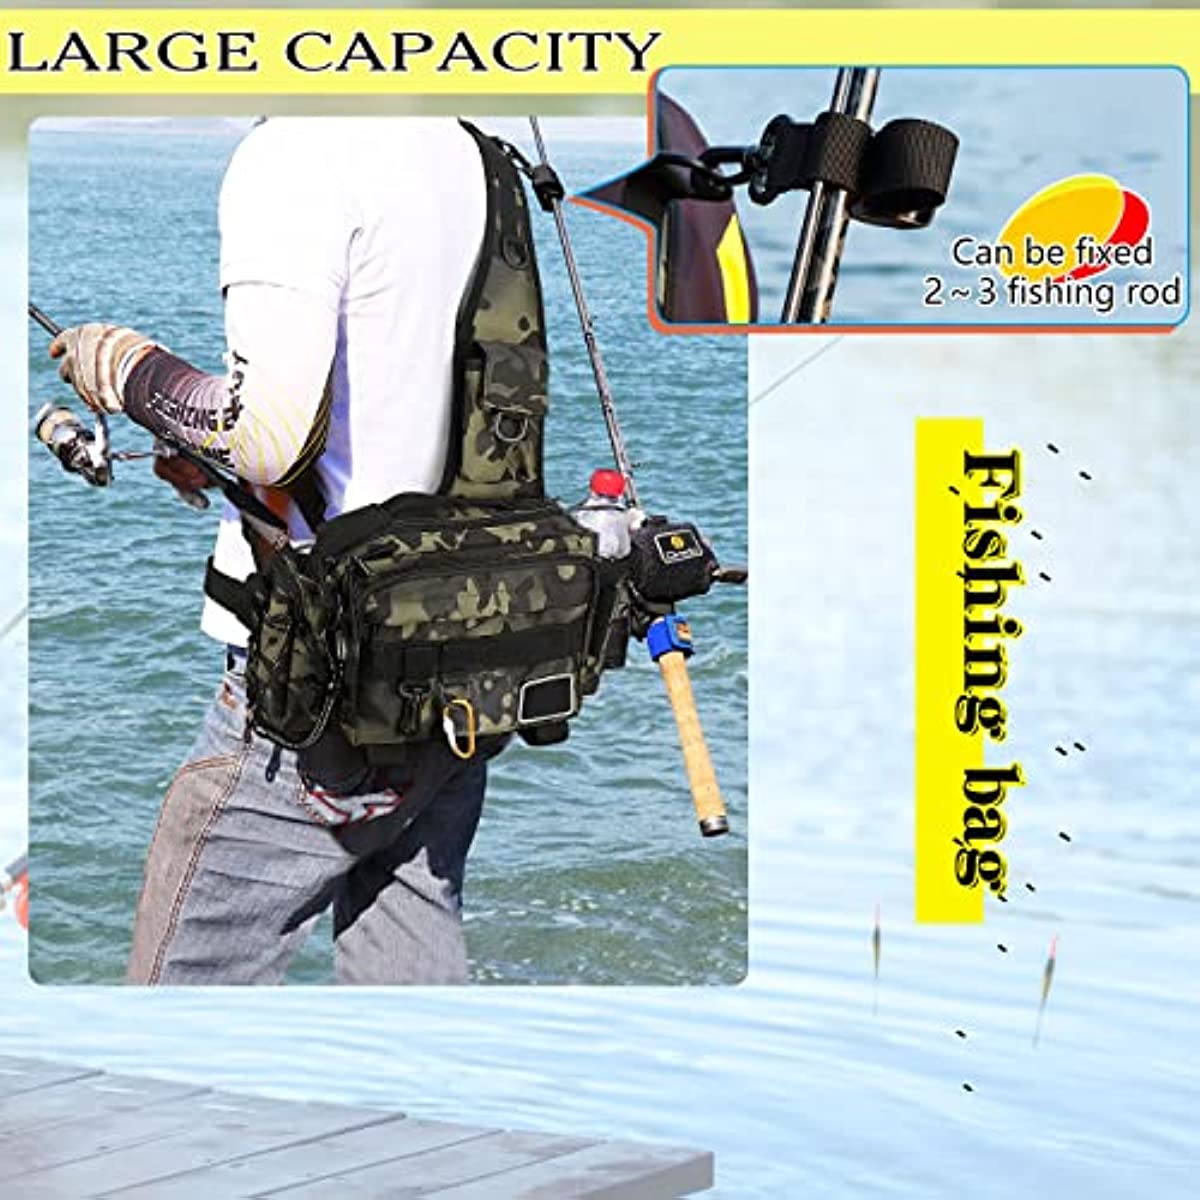 3 Layers Waterproof Fishing Tackle Backpack Multifunctional - Temu